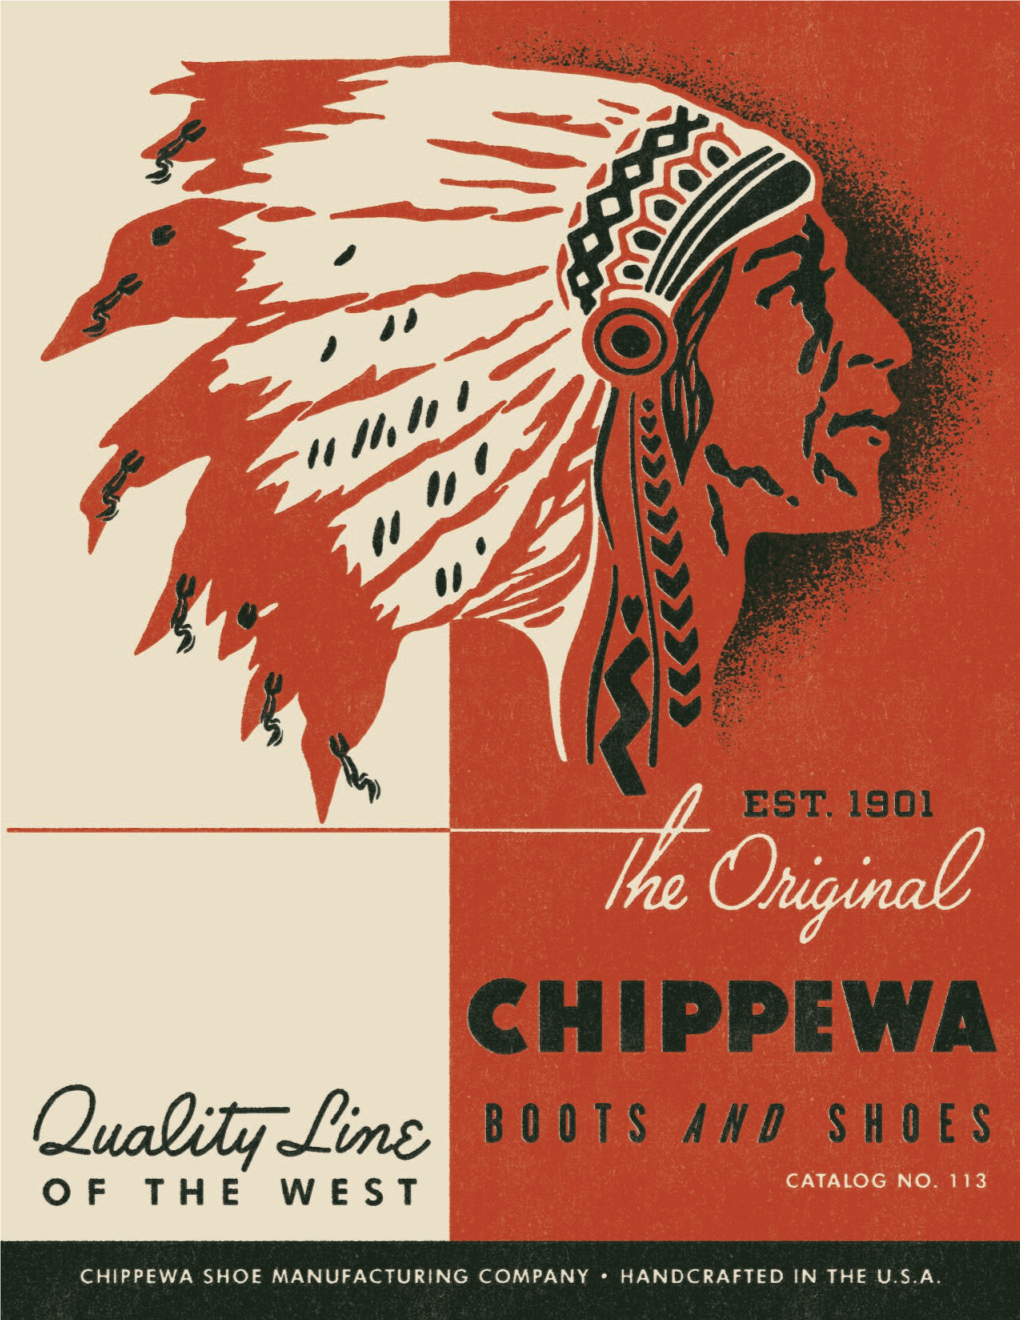 ORIGINAL CHIPPEWA, Was Organized in 1901 in Chip- Pewa Falls, Wisconsin